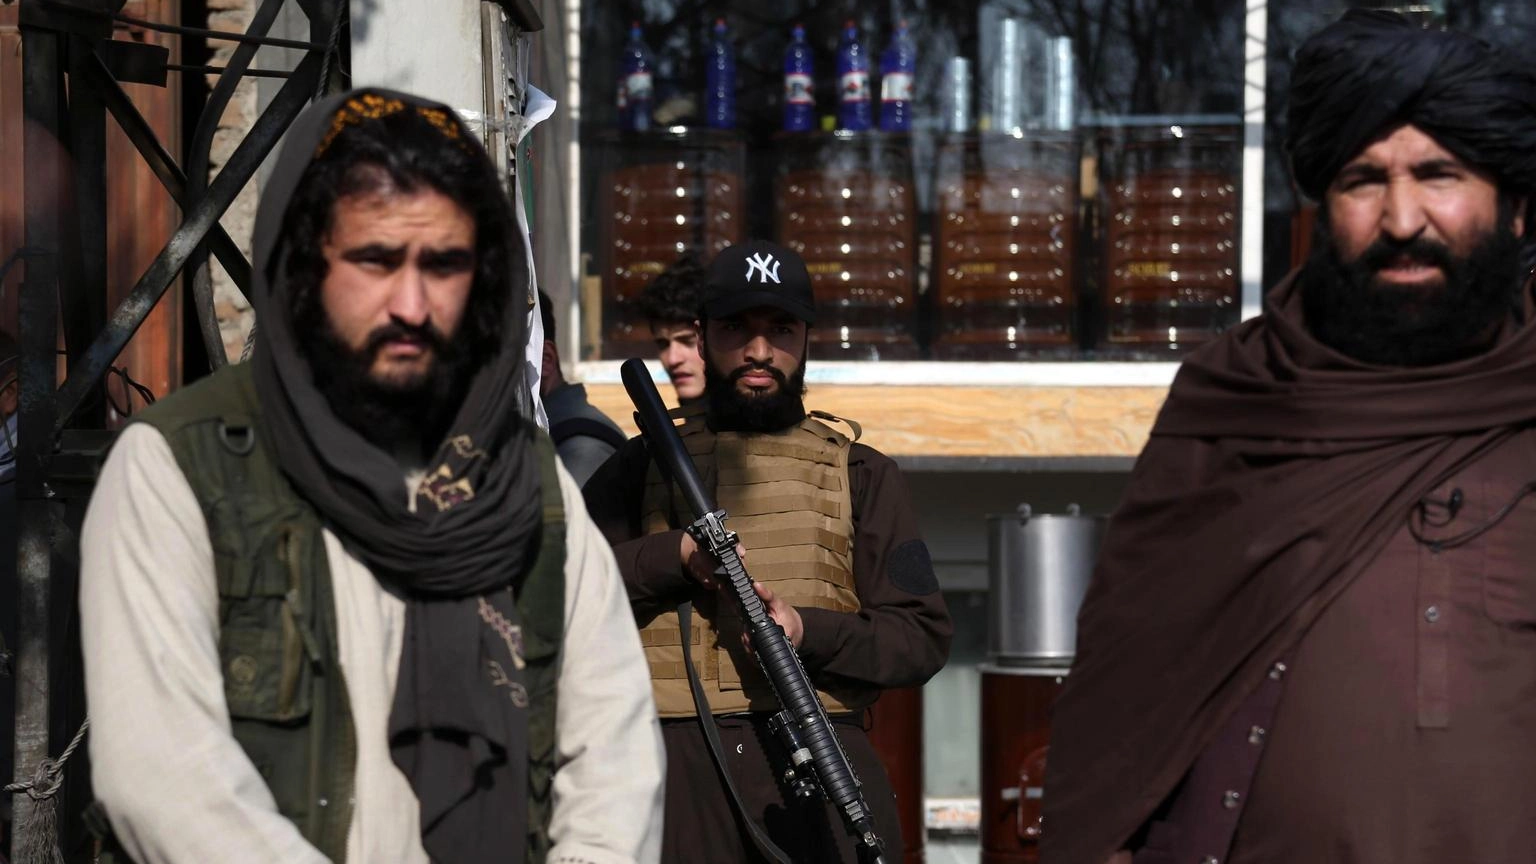 Lavrov, talebani via da lista terroristi riflette realtà